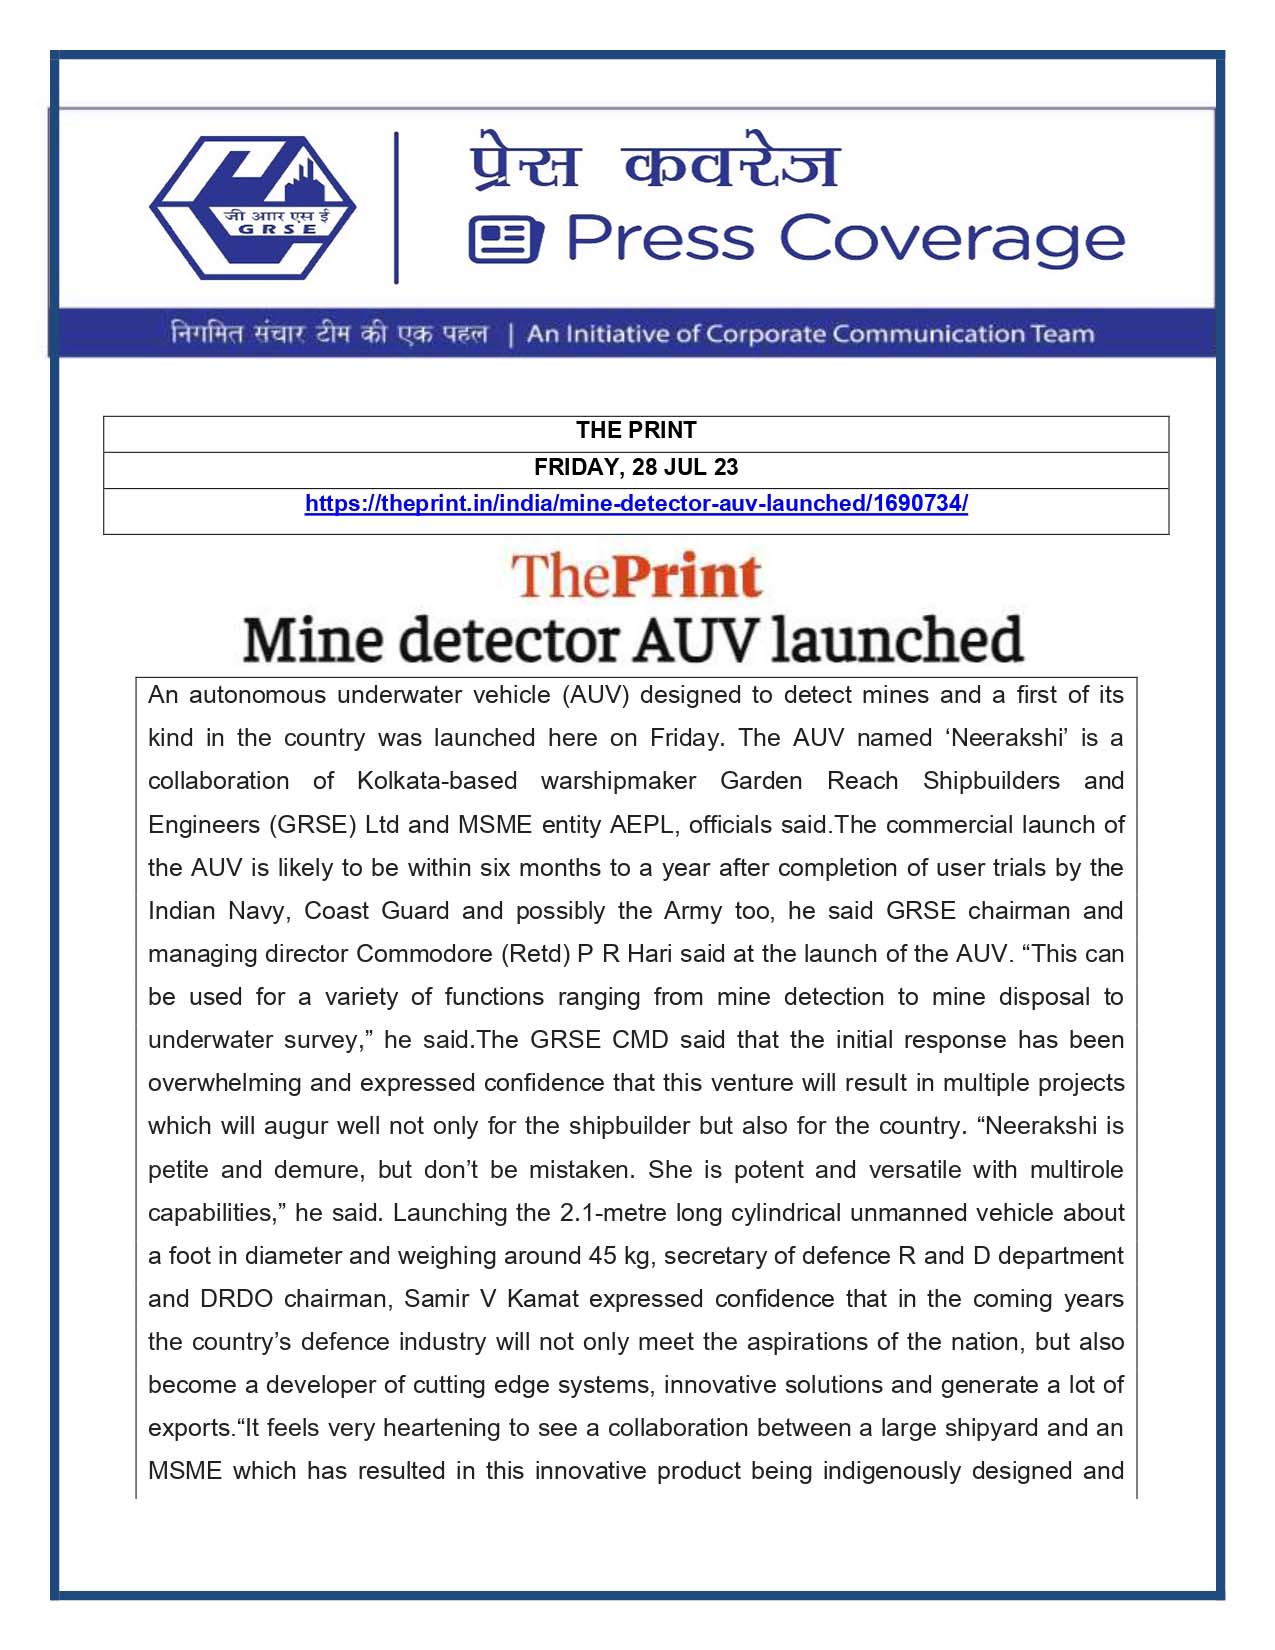 Press Coverage : The Print, 28 Jul 23 : Mine Detector AUV Launched